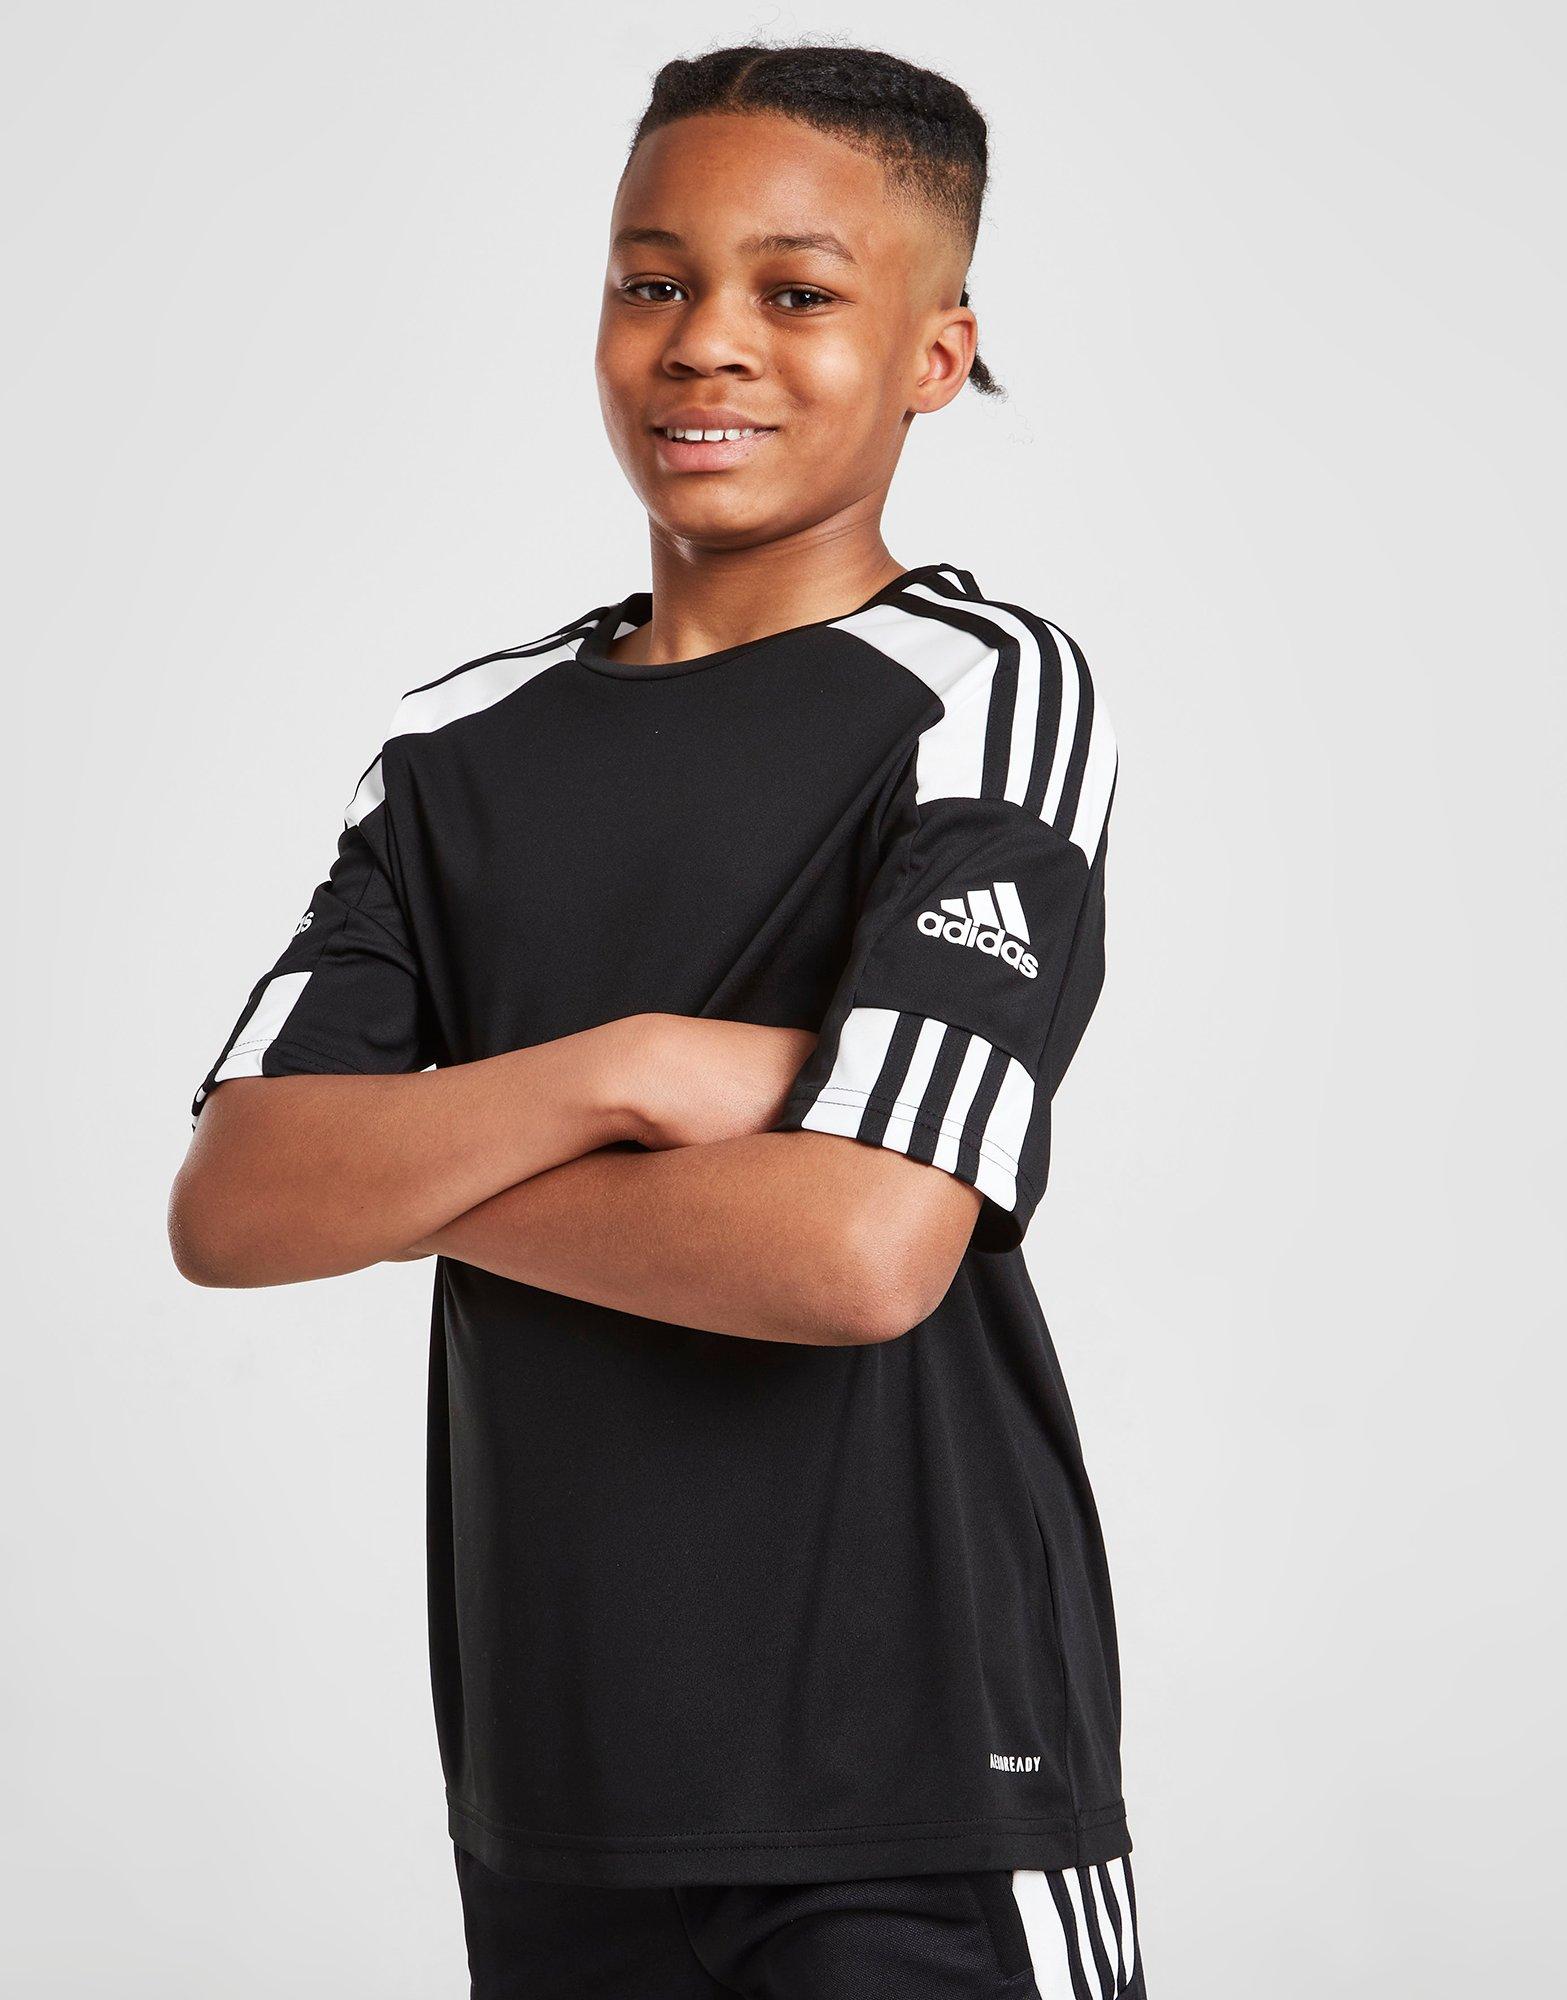 T-Shirts Adidas Kinder T-Shirts ADIDAS 15-16 Jahre schwarz Kinder Jungen Adidas Kleidung Adidas Kinder T-Shirts & Polos Adidas Kinder T-Shirts Adidas Kinder 